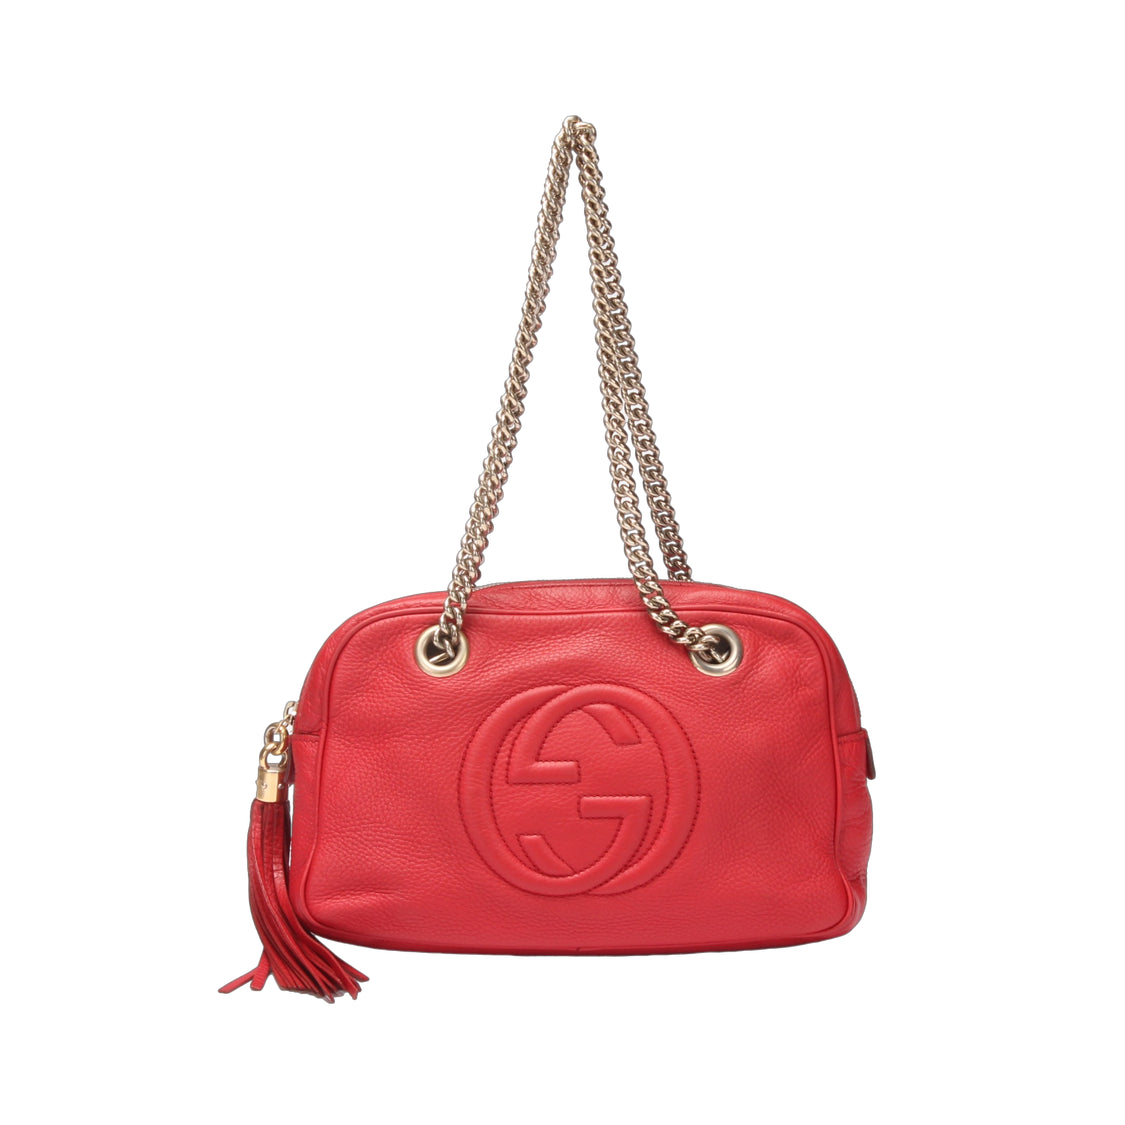 Gucci Soho Chain Shoulder Bag Leather Shoulder Bag 308983 in Good condition